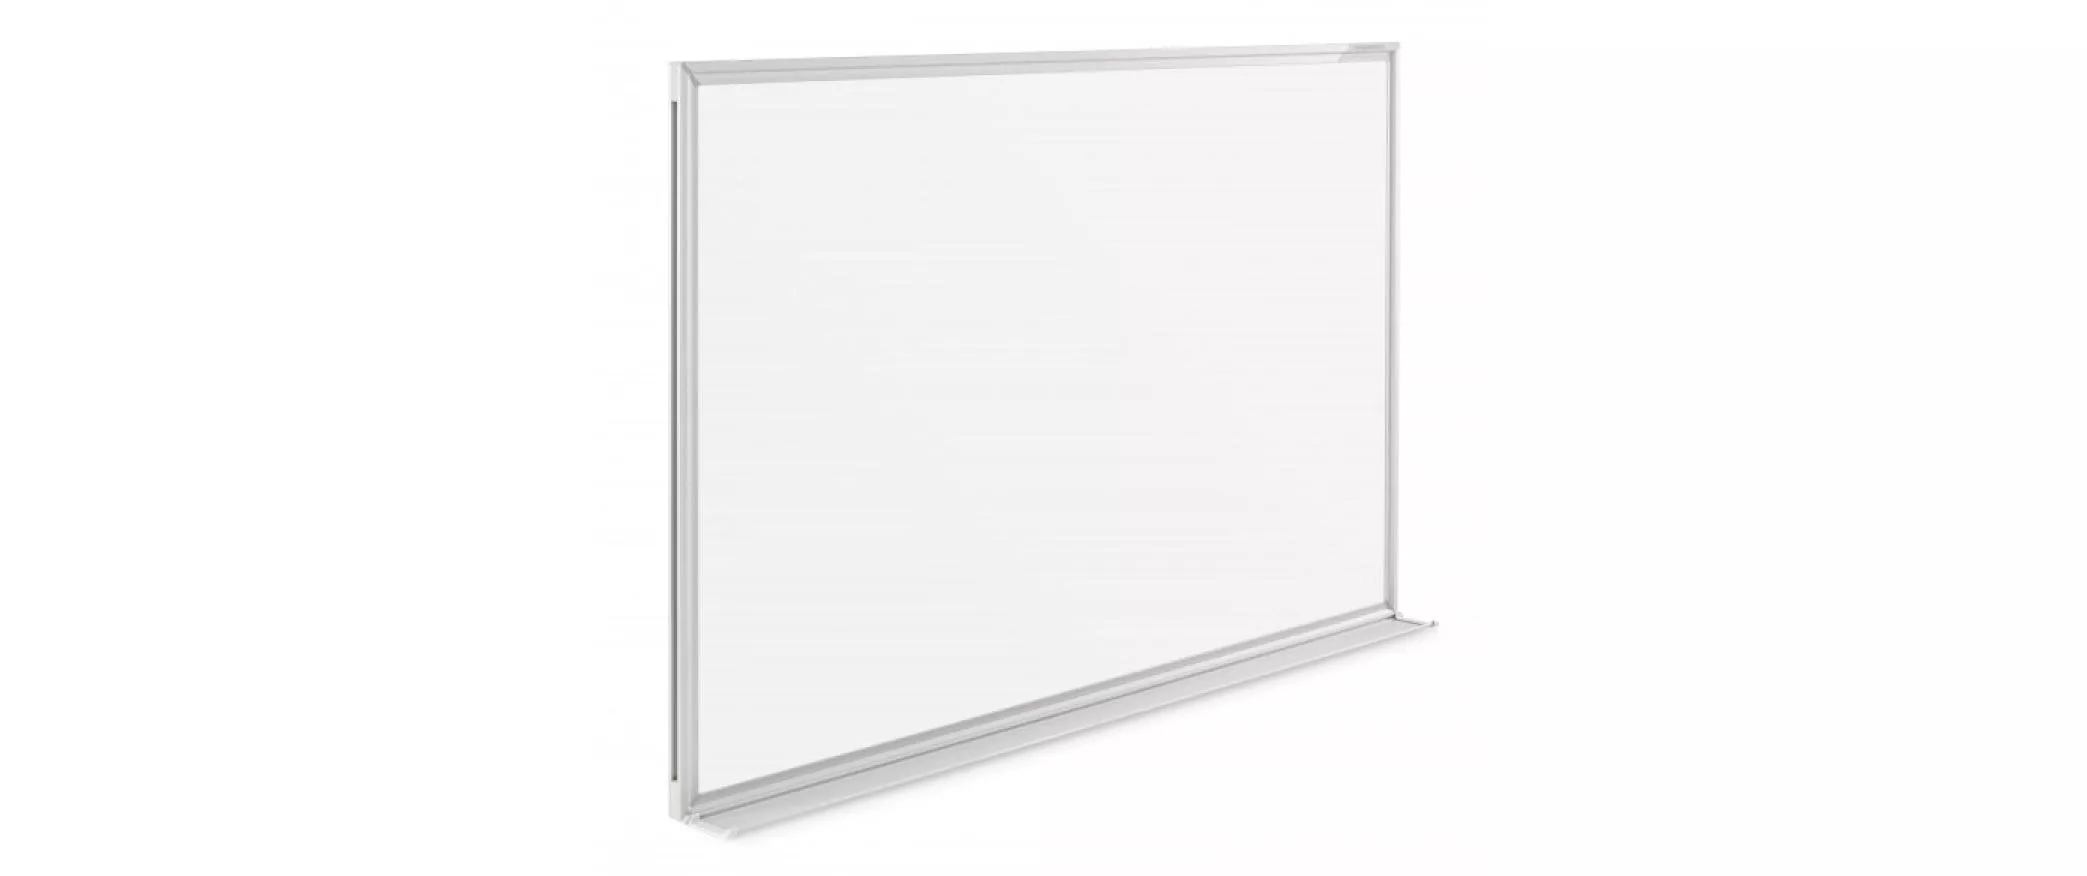 Tableau blanc Design SP 150 x 100 cm Blanc, 1 pièce